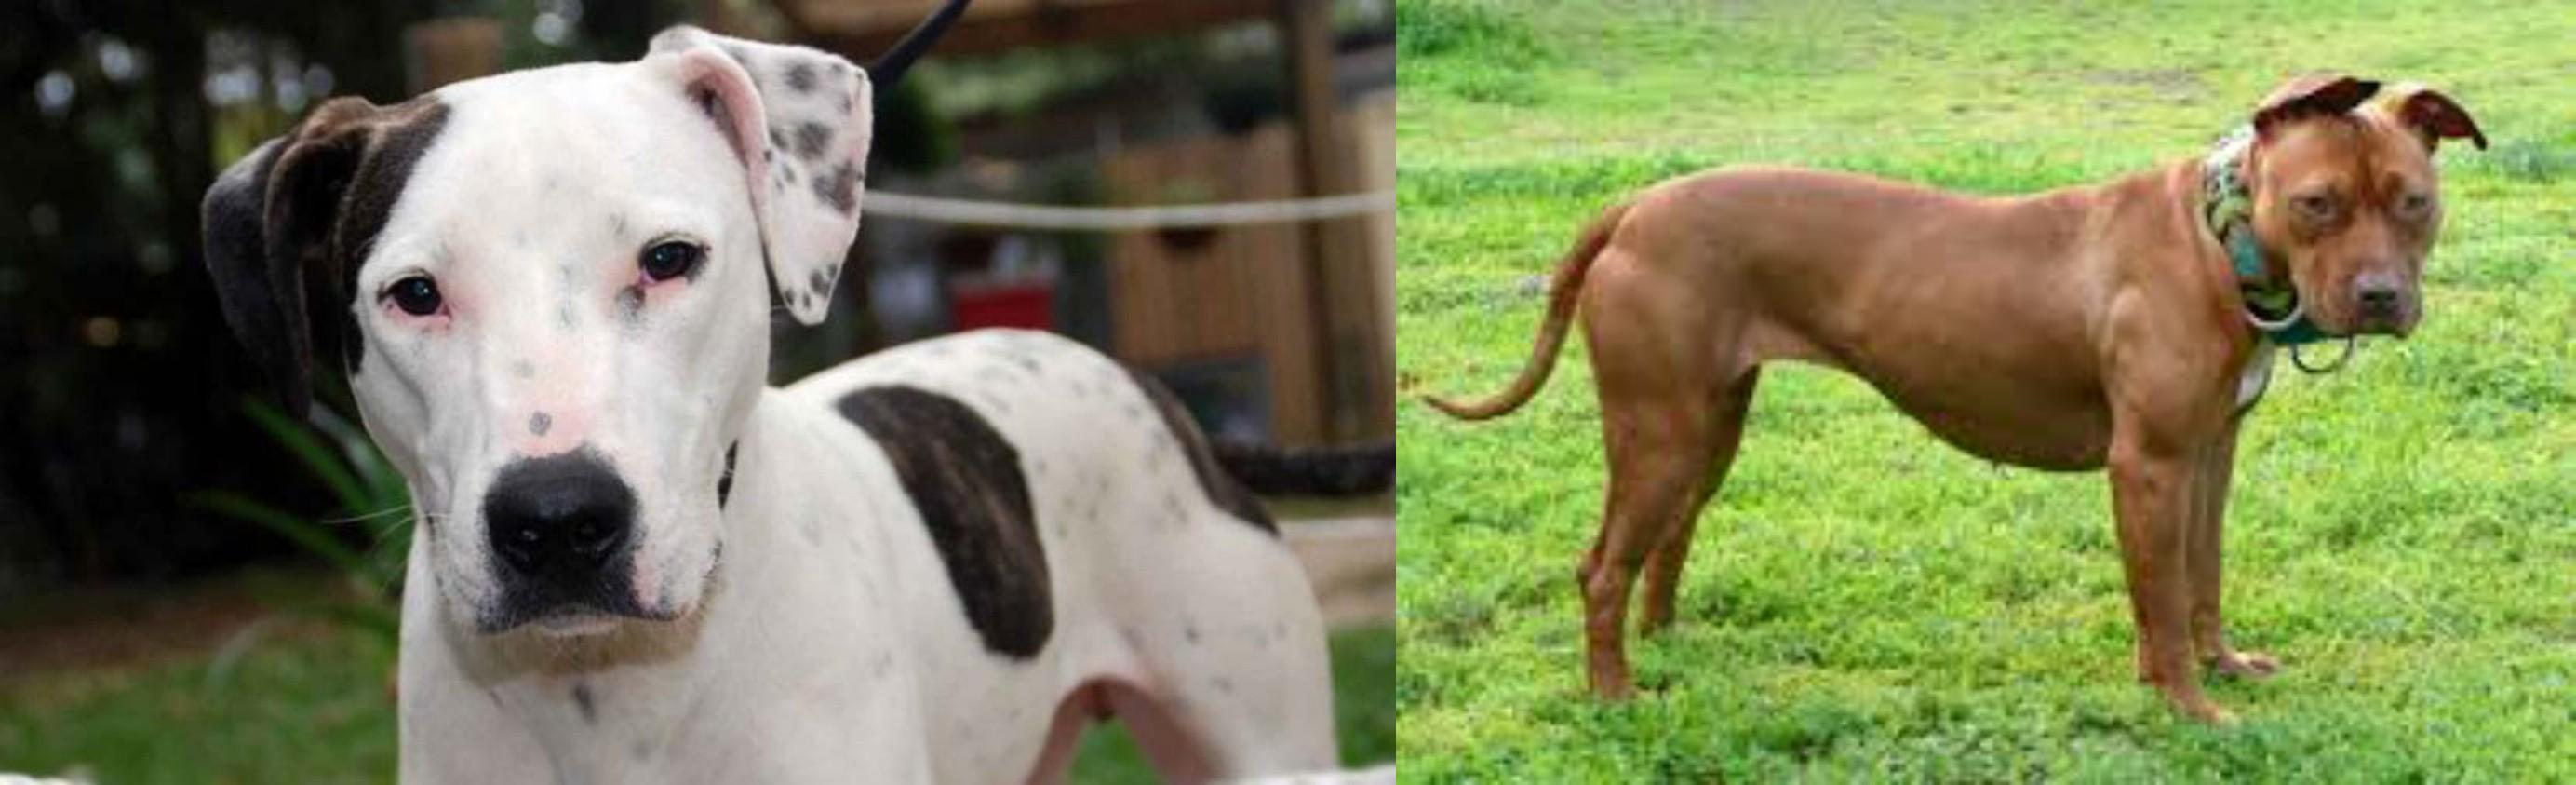 Bull Arab Vs American Pit Bull Terrier Breed Comparison